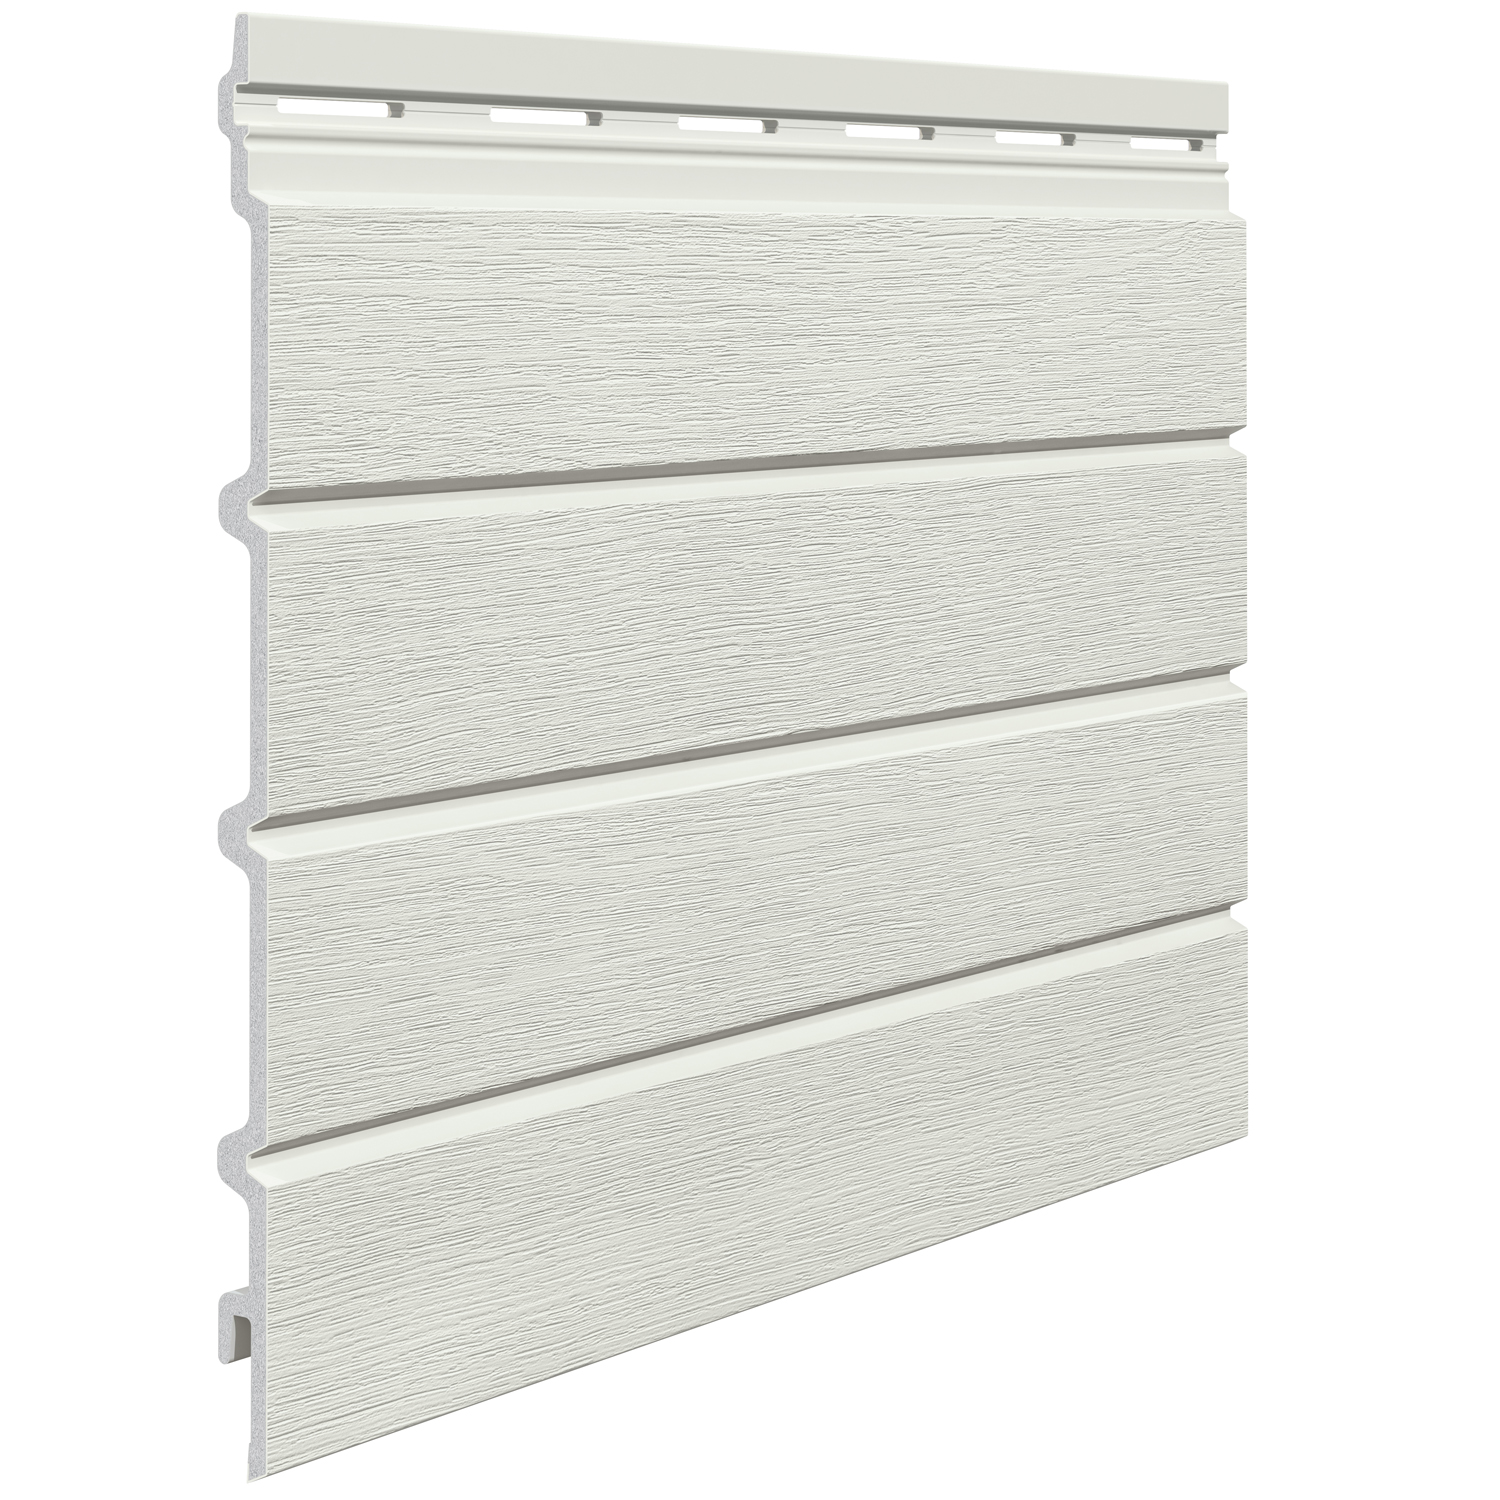 Facade cladding, Kerrafront, Modern Wood, Pearl Grey, fourfold panel